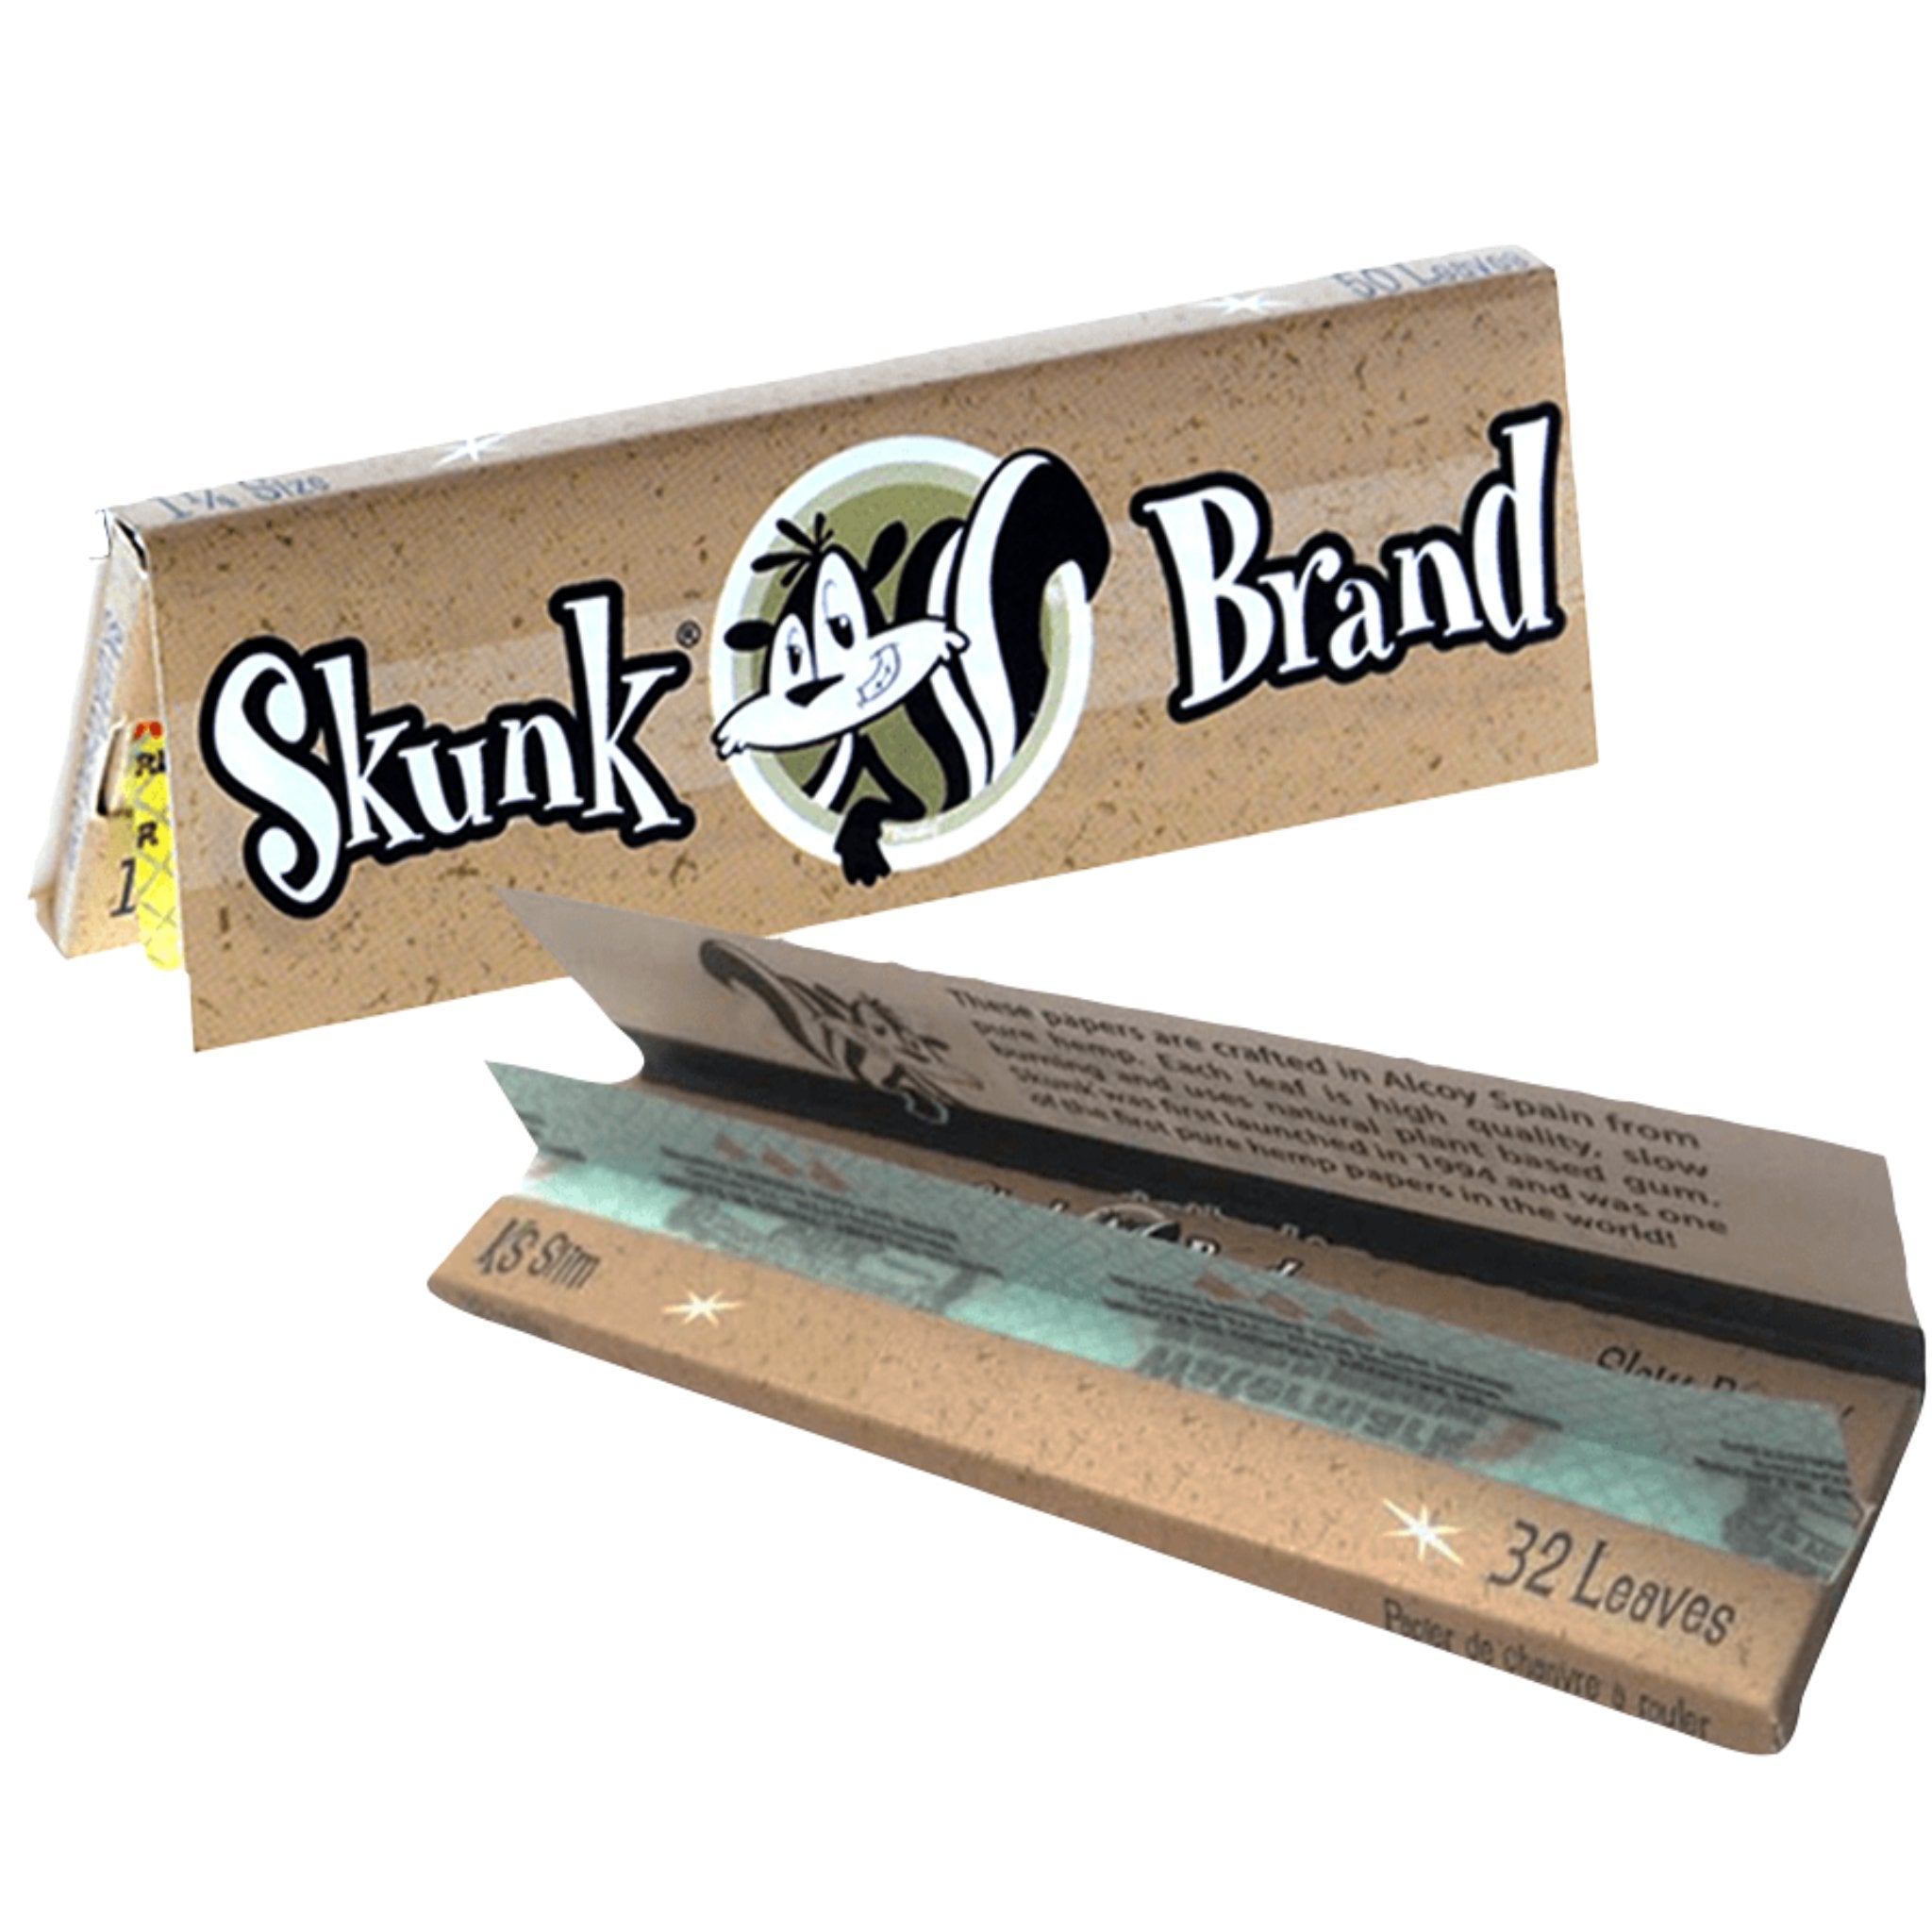 Skunk Brand Rolling Papers - 3 Pack Papers HBI International 1 1/4 - 3 Pack 